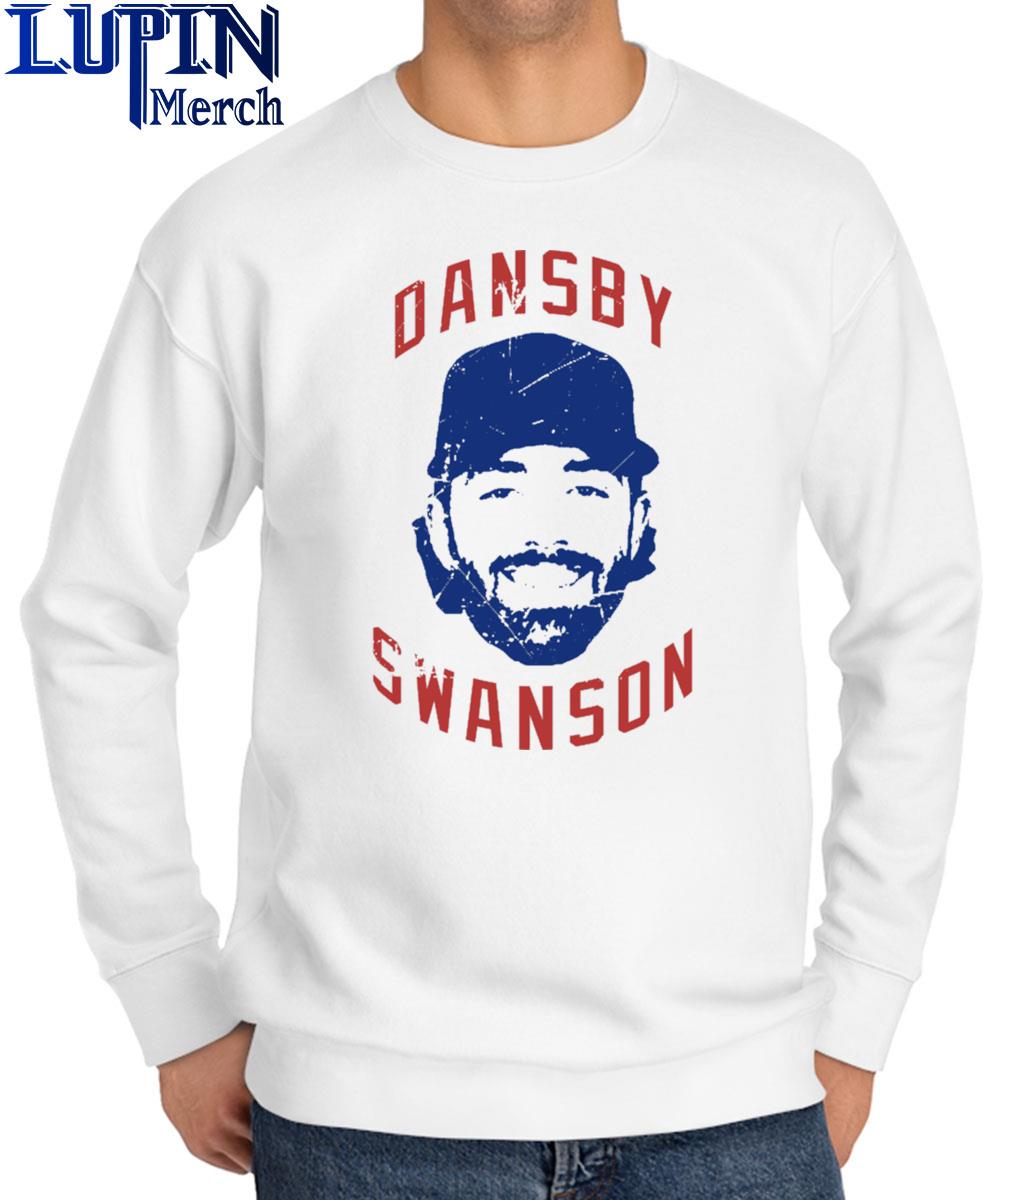 Dansby swanson chicago dans shirt, hoodie, longsleeve tee, sweater